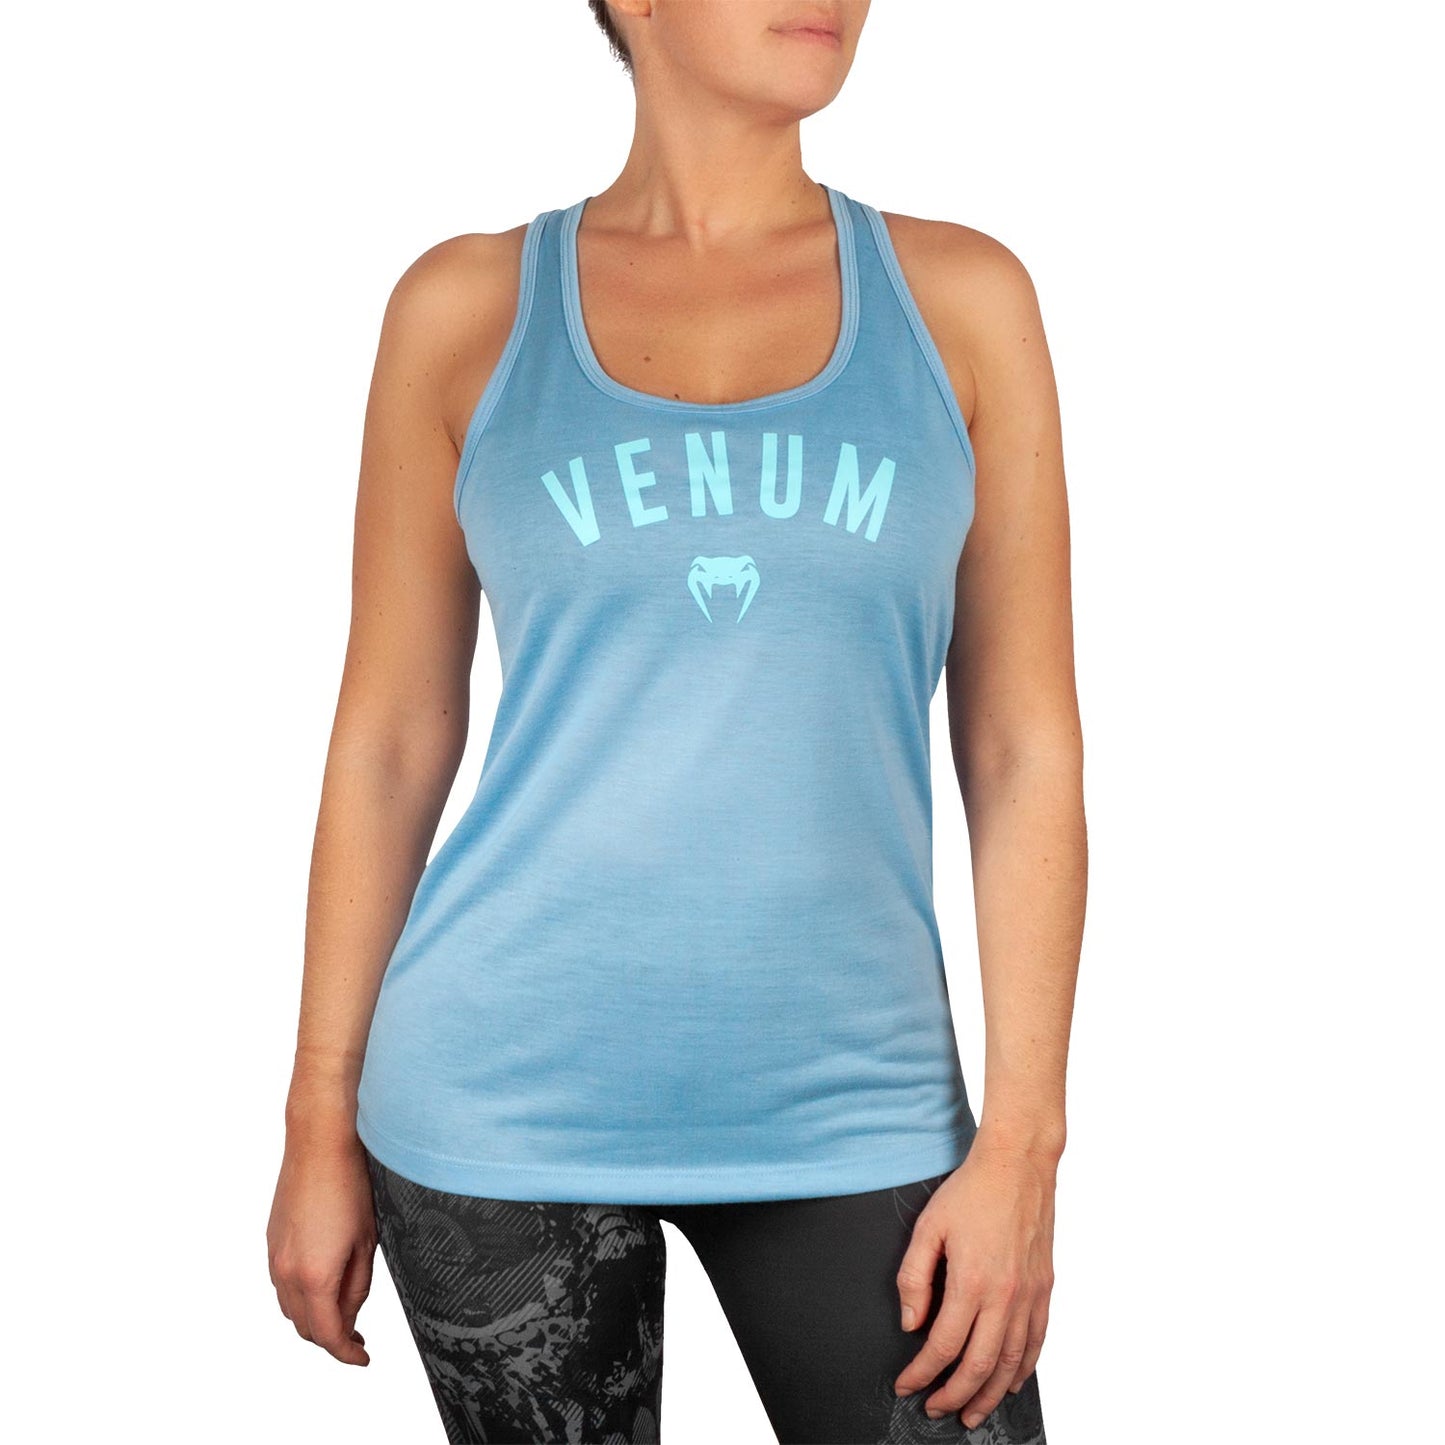 Venum Classic Tank Top - For Women - Light Cyan